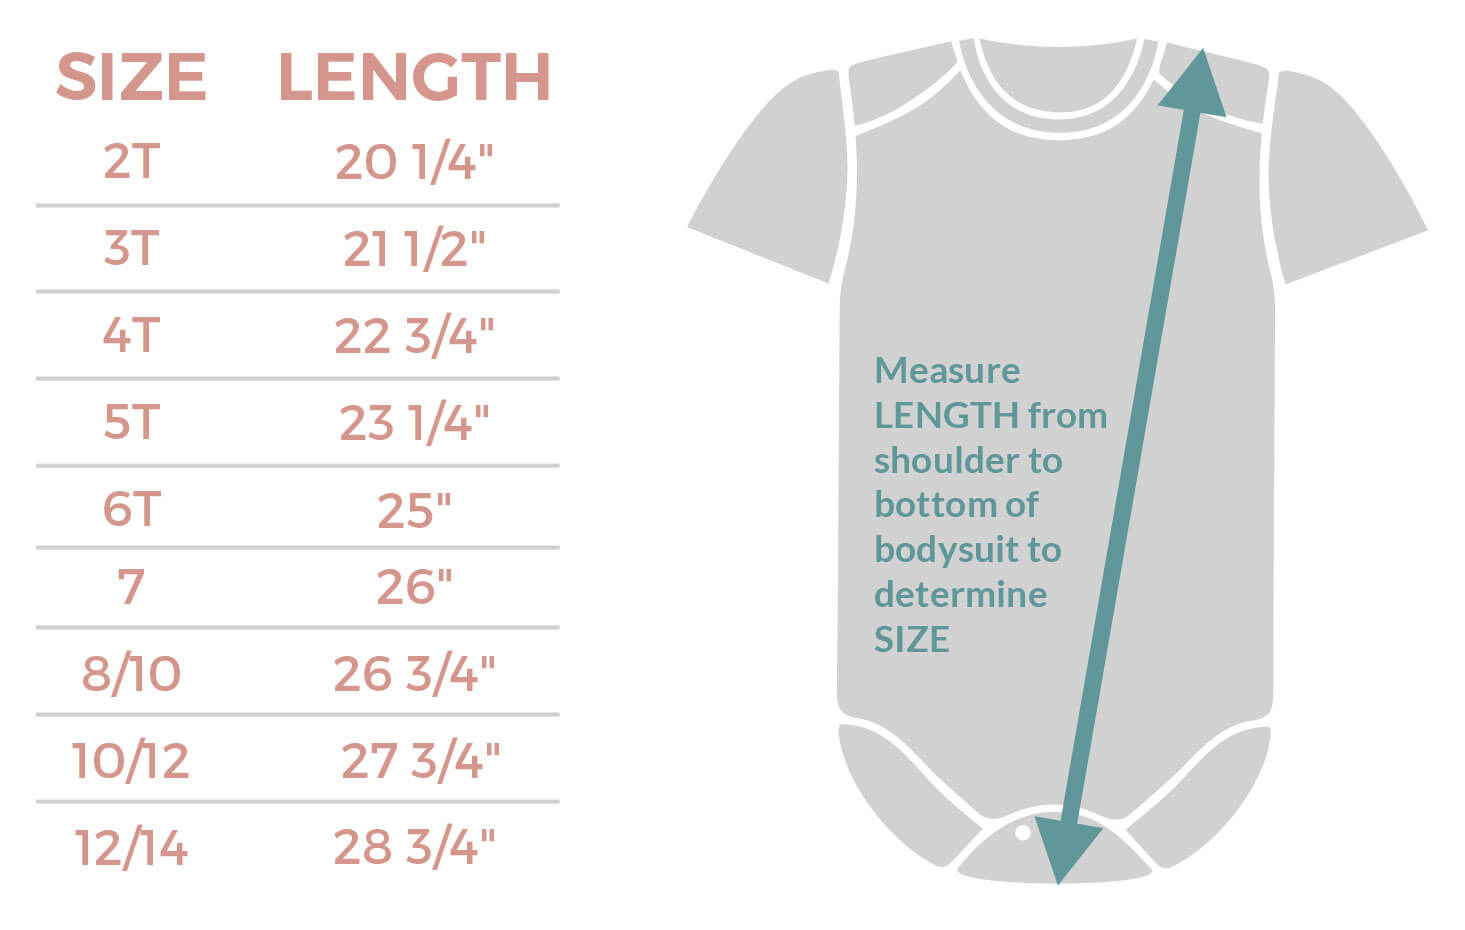 Baby Clothes Measurement Chart